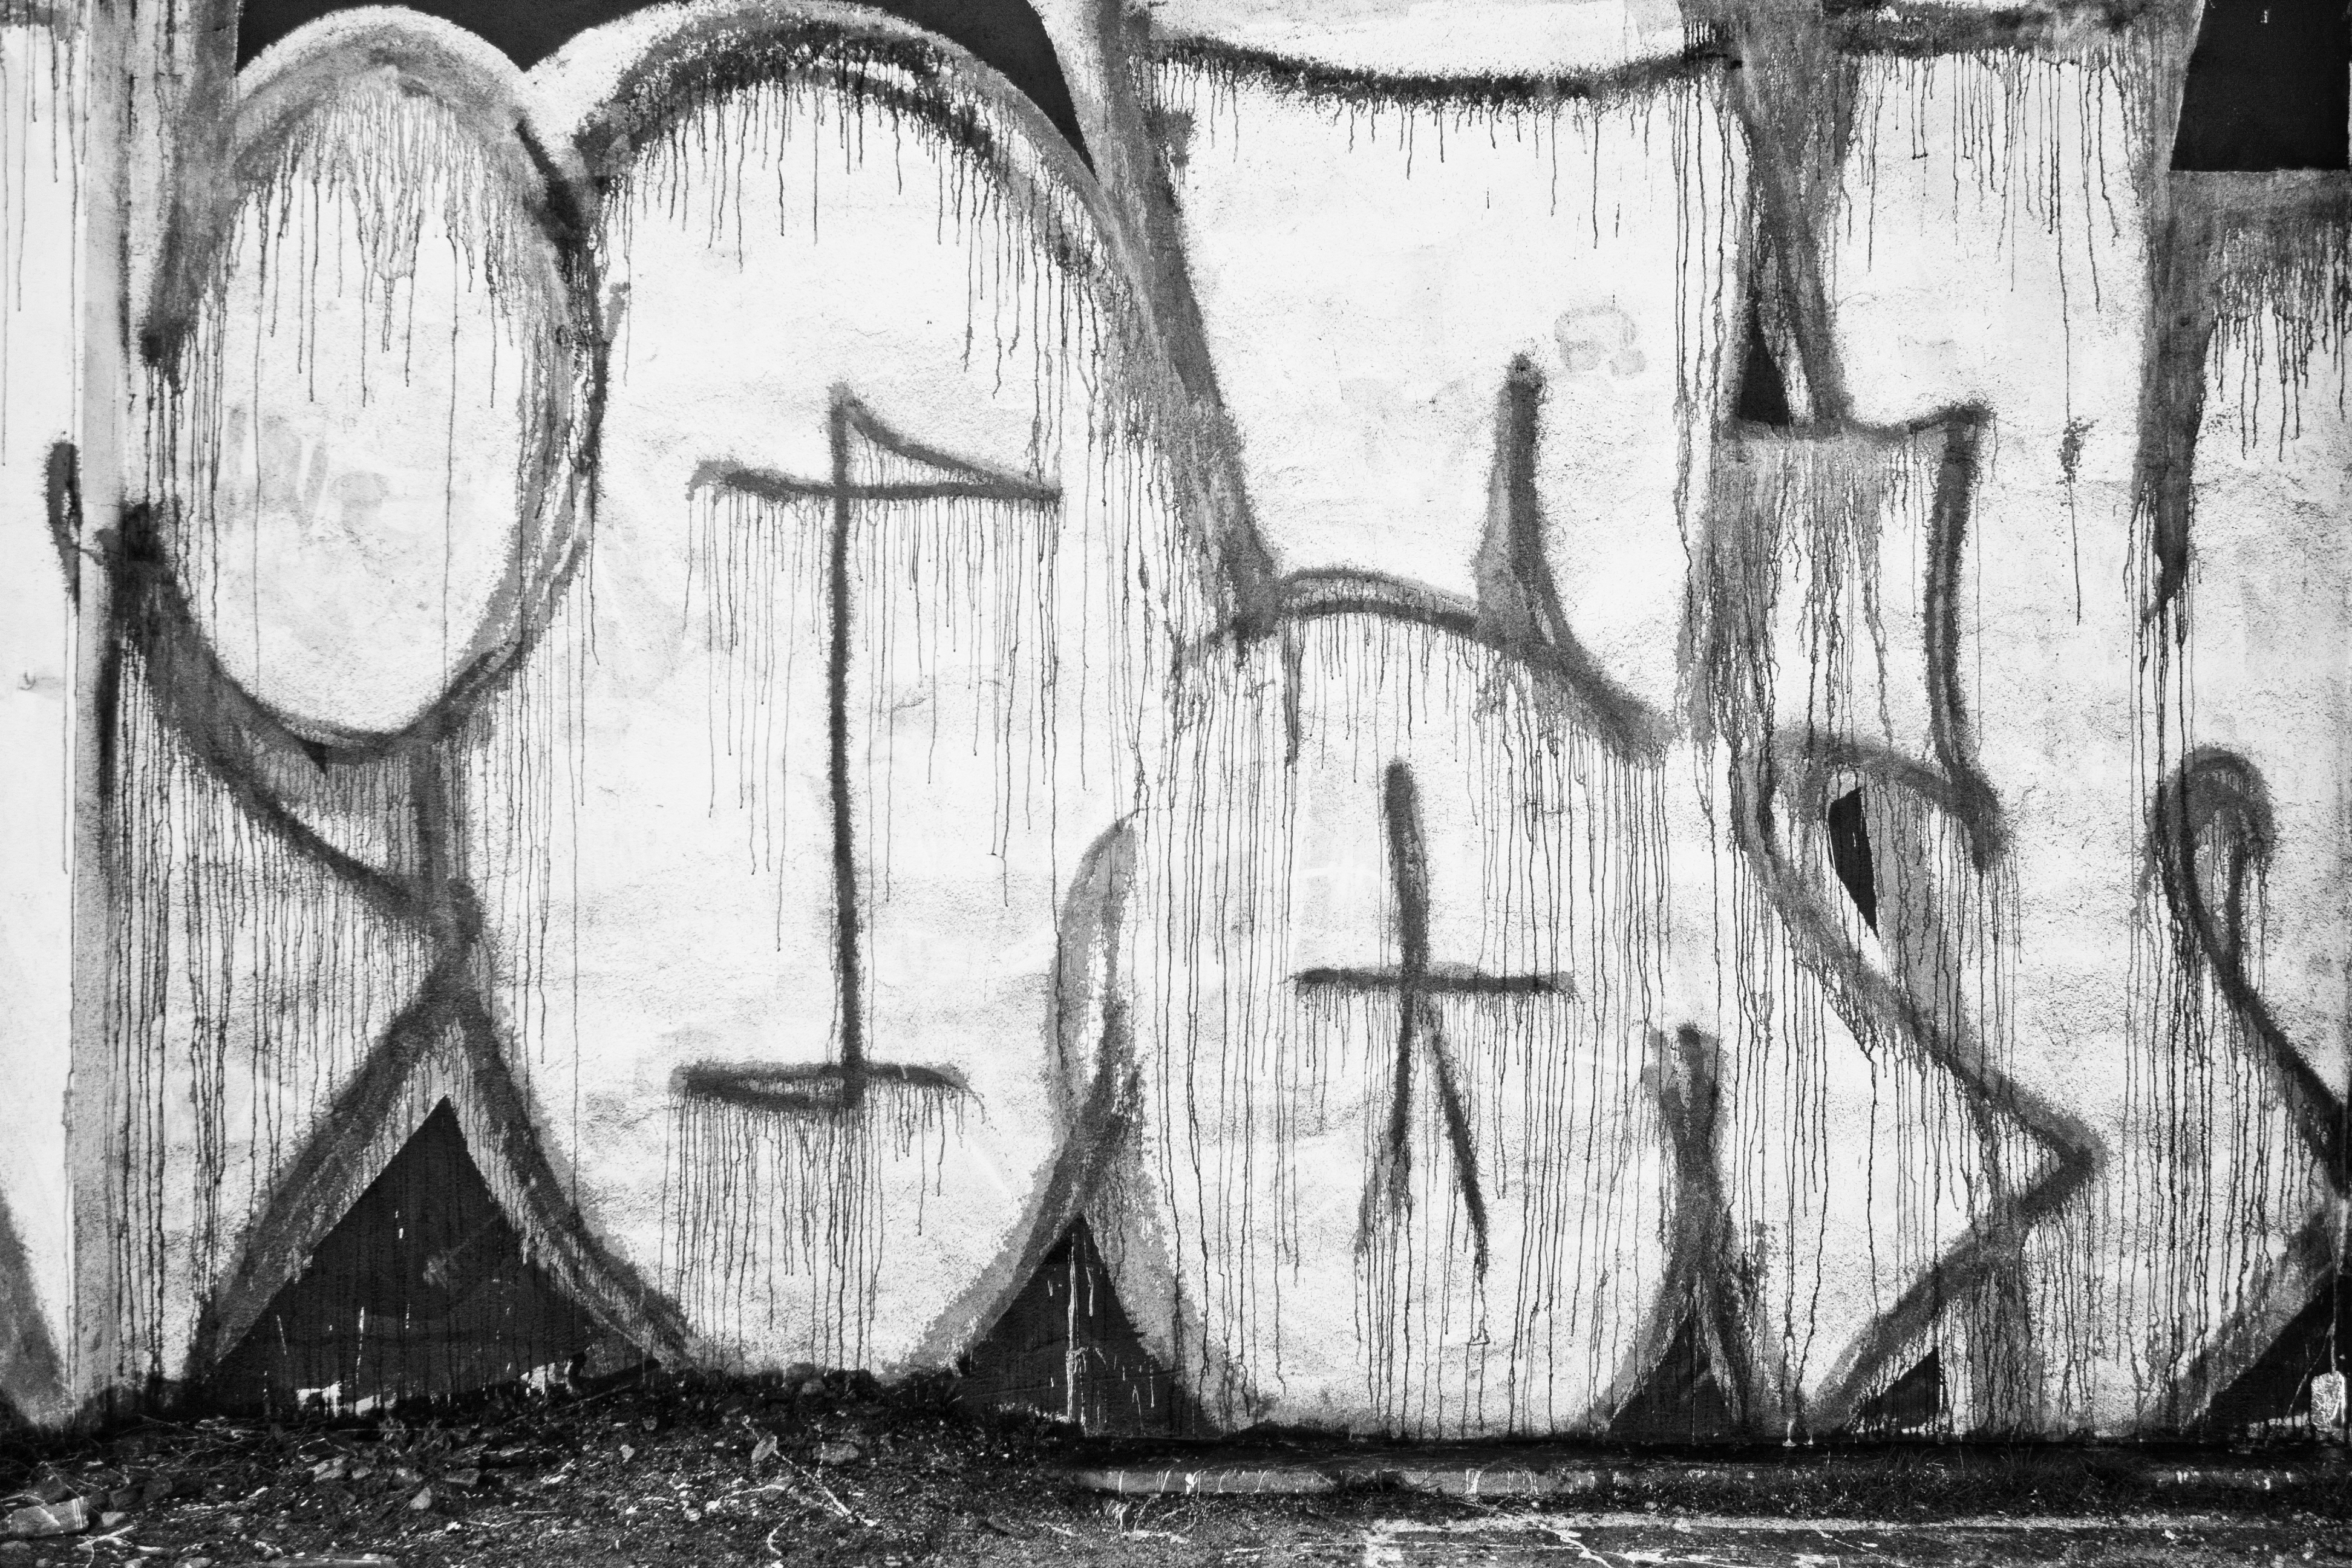 Feeling throwing. Граффити Throw up. Иисус грустный граффити. Throw up Graffiti.